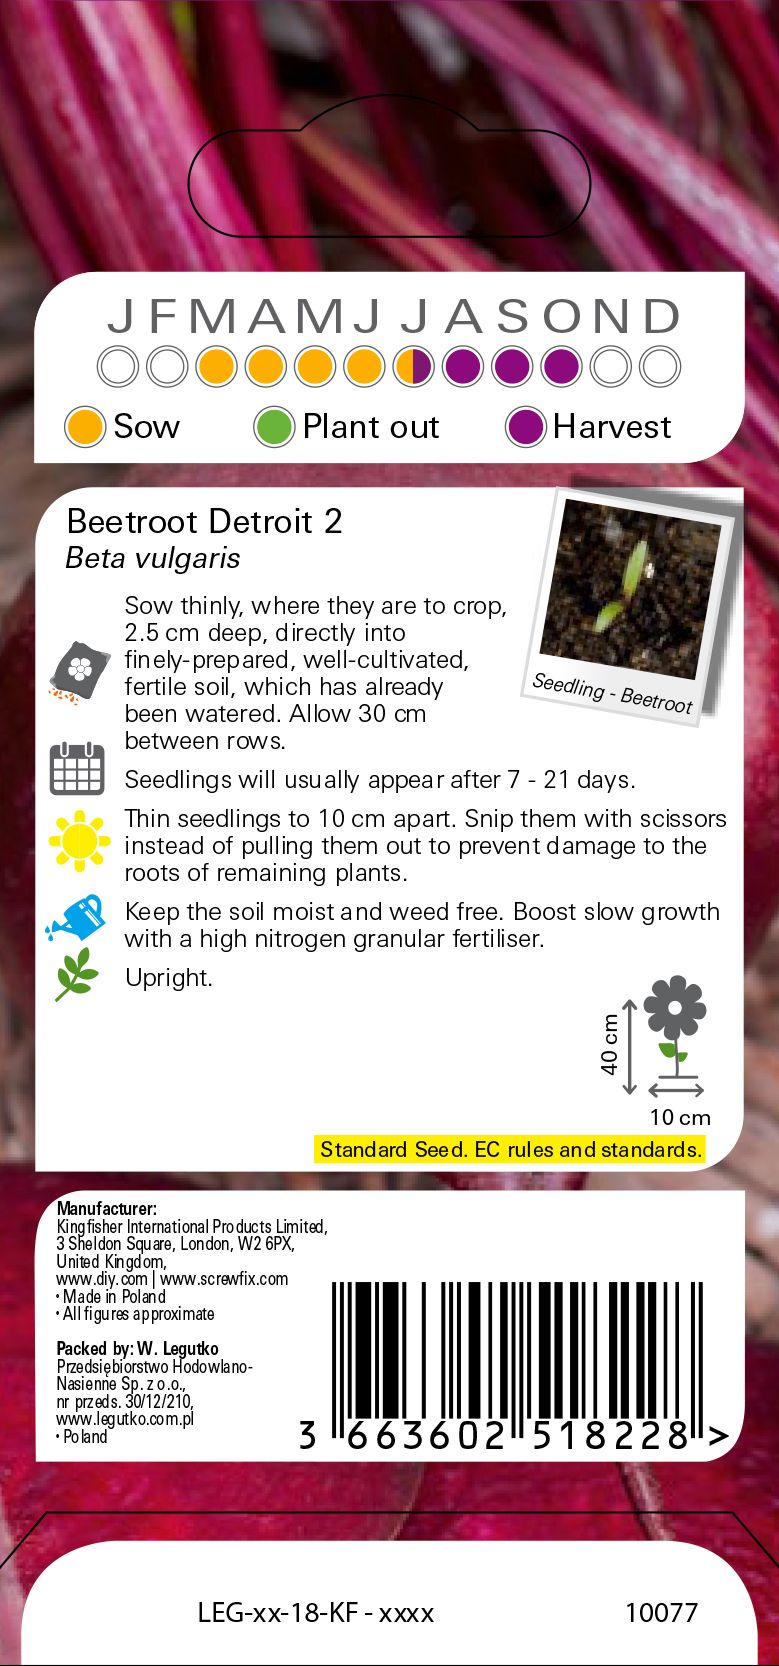 Detroit 2 beetroot Seed